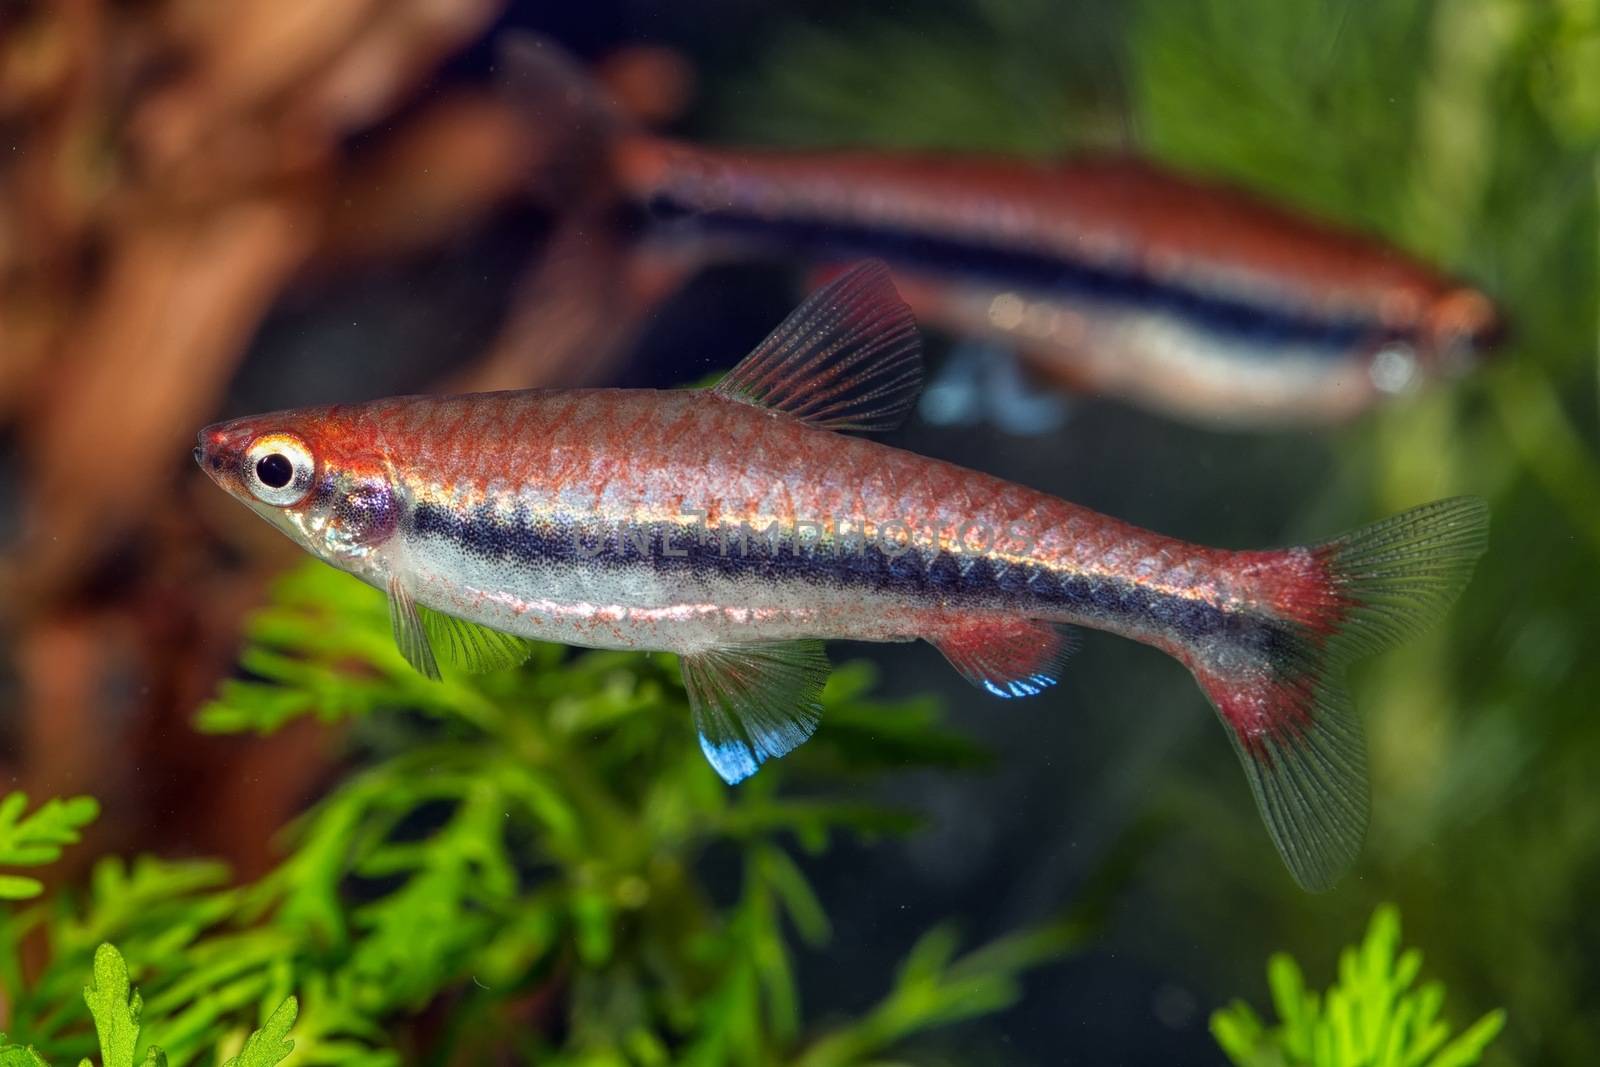 Tropical freshwater aquarium fish from genus Nannostomus.